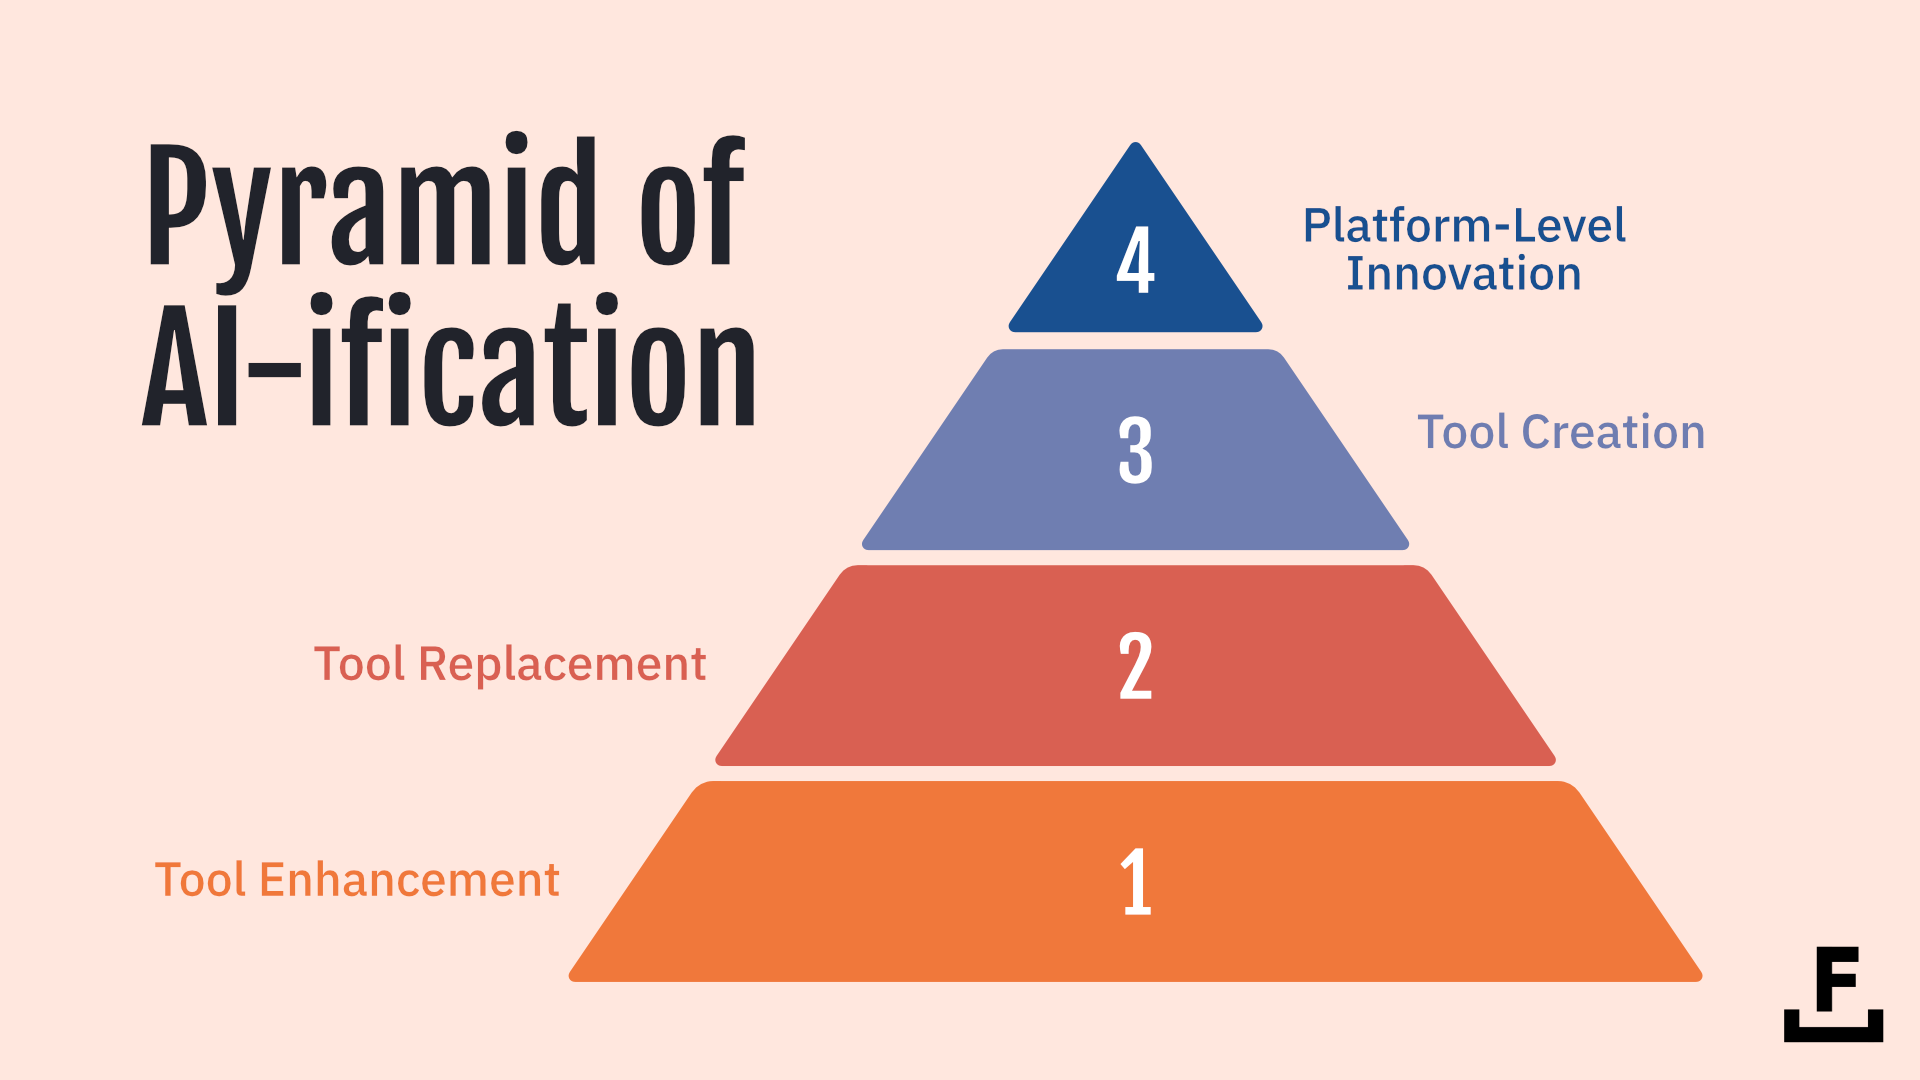 Pyramid of AI-fication